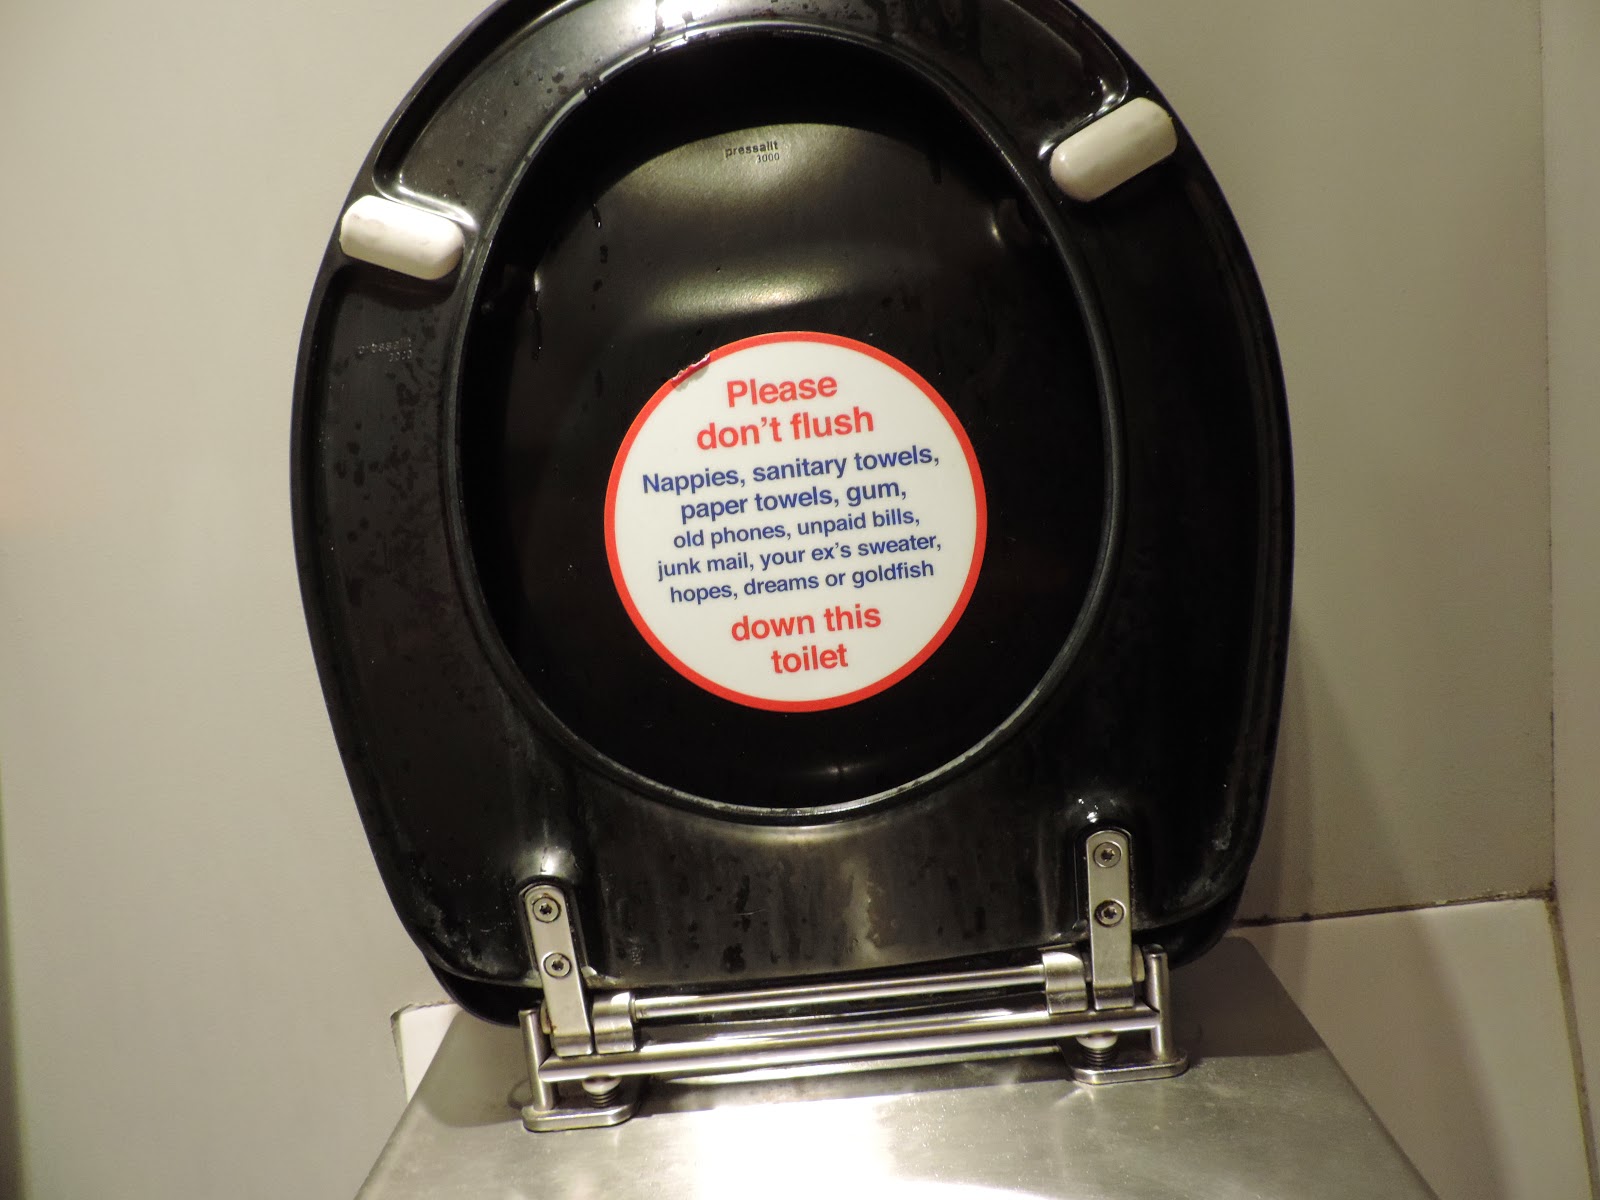 don't flush goldfish down this toilet